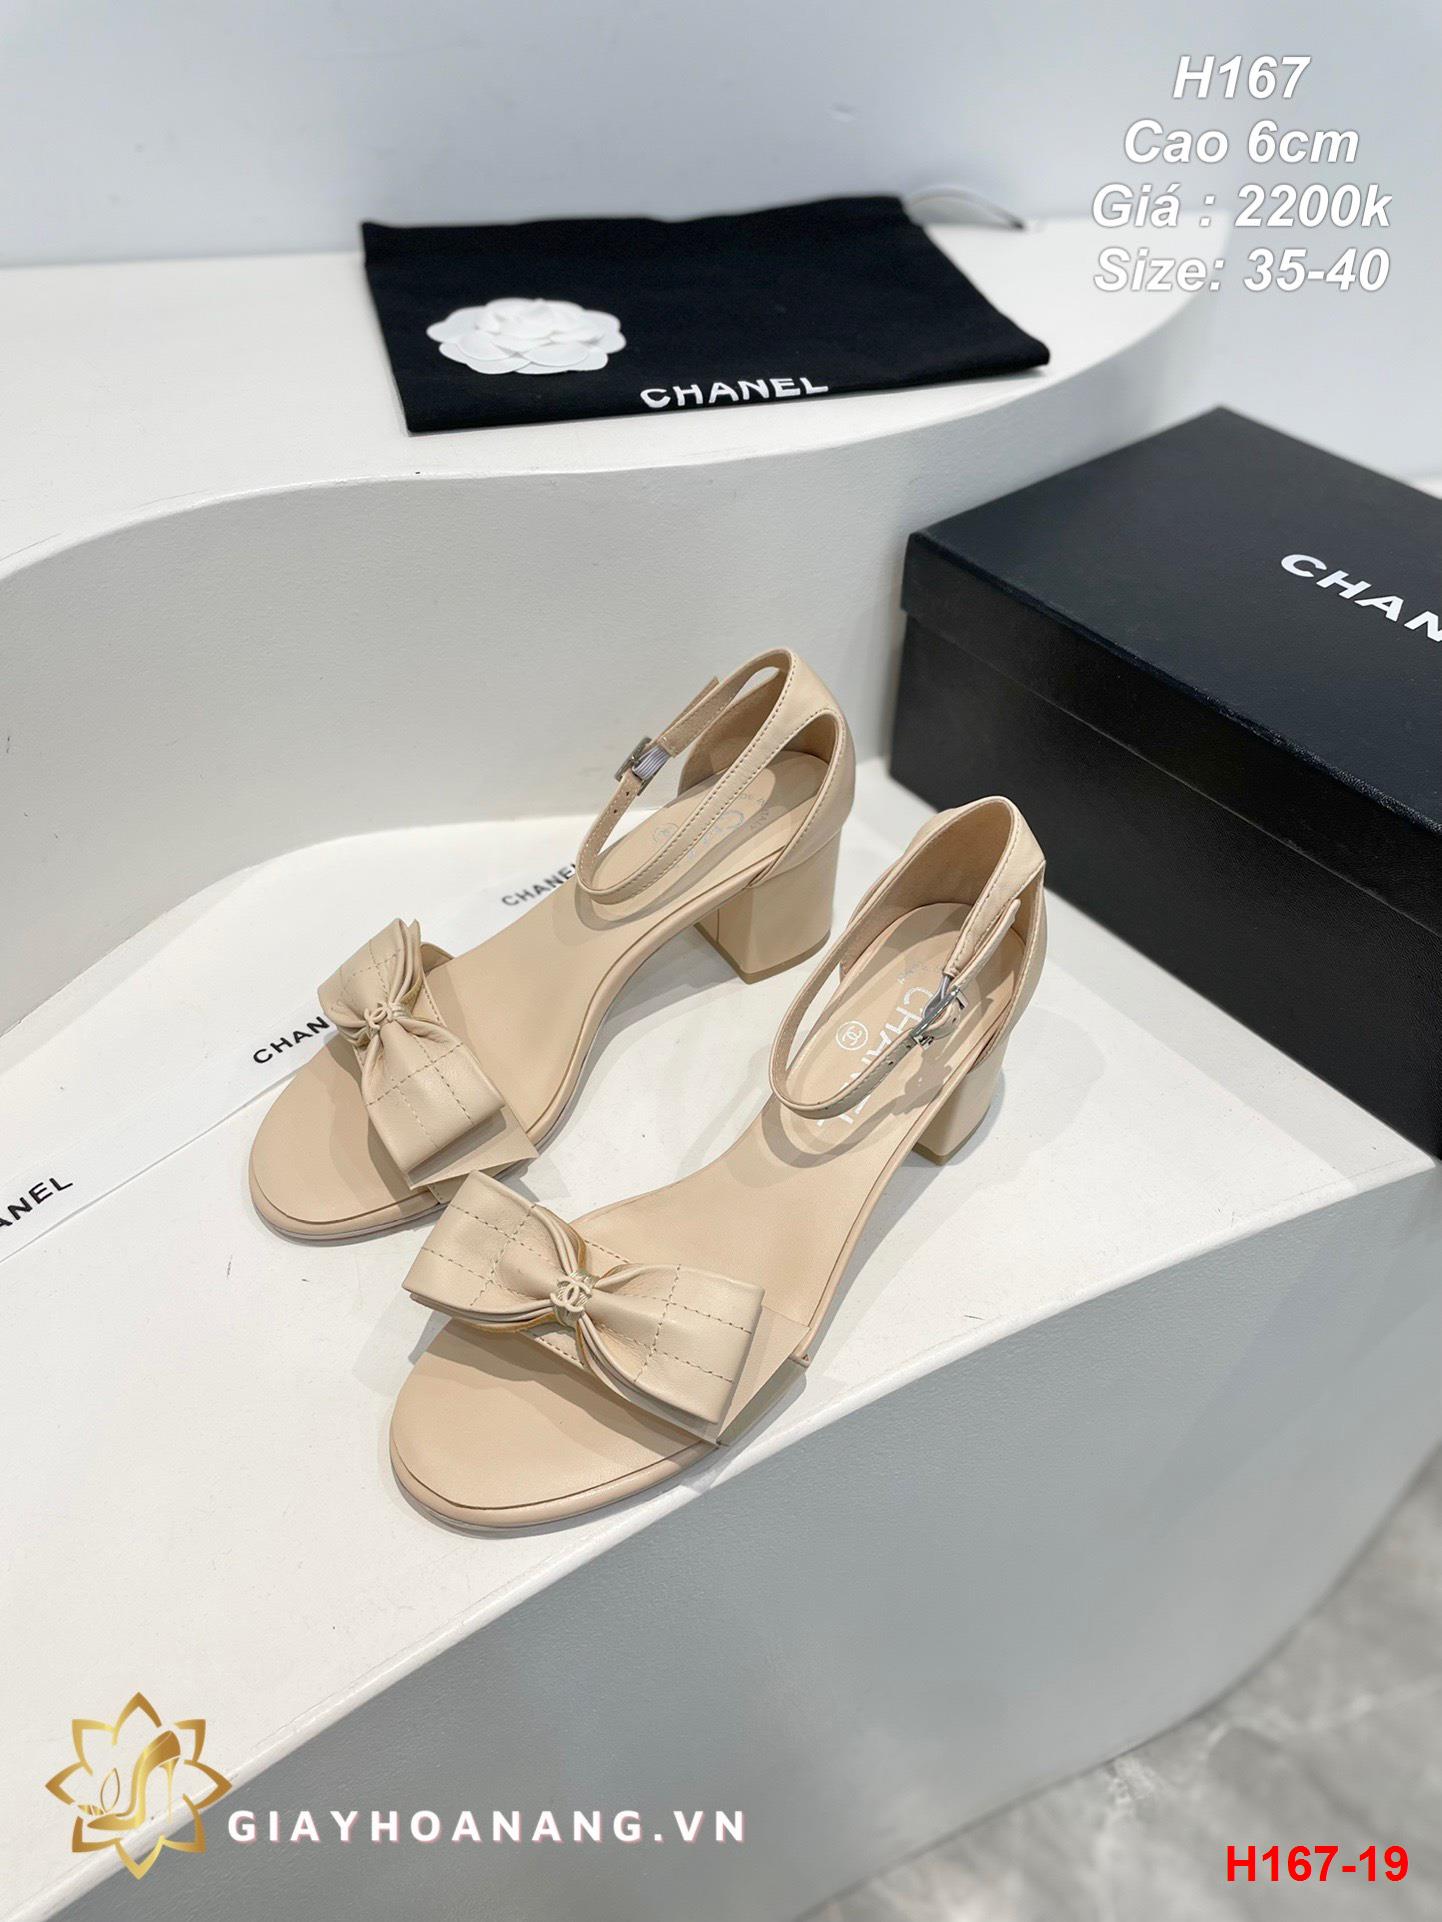 H167-19 Chanel sandal cao 6cm siêu cấp